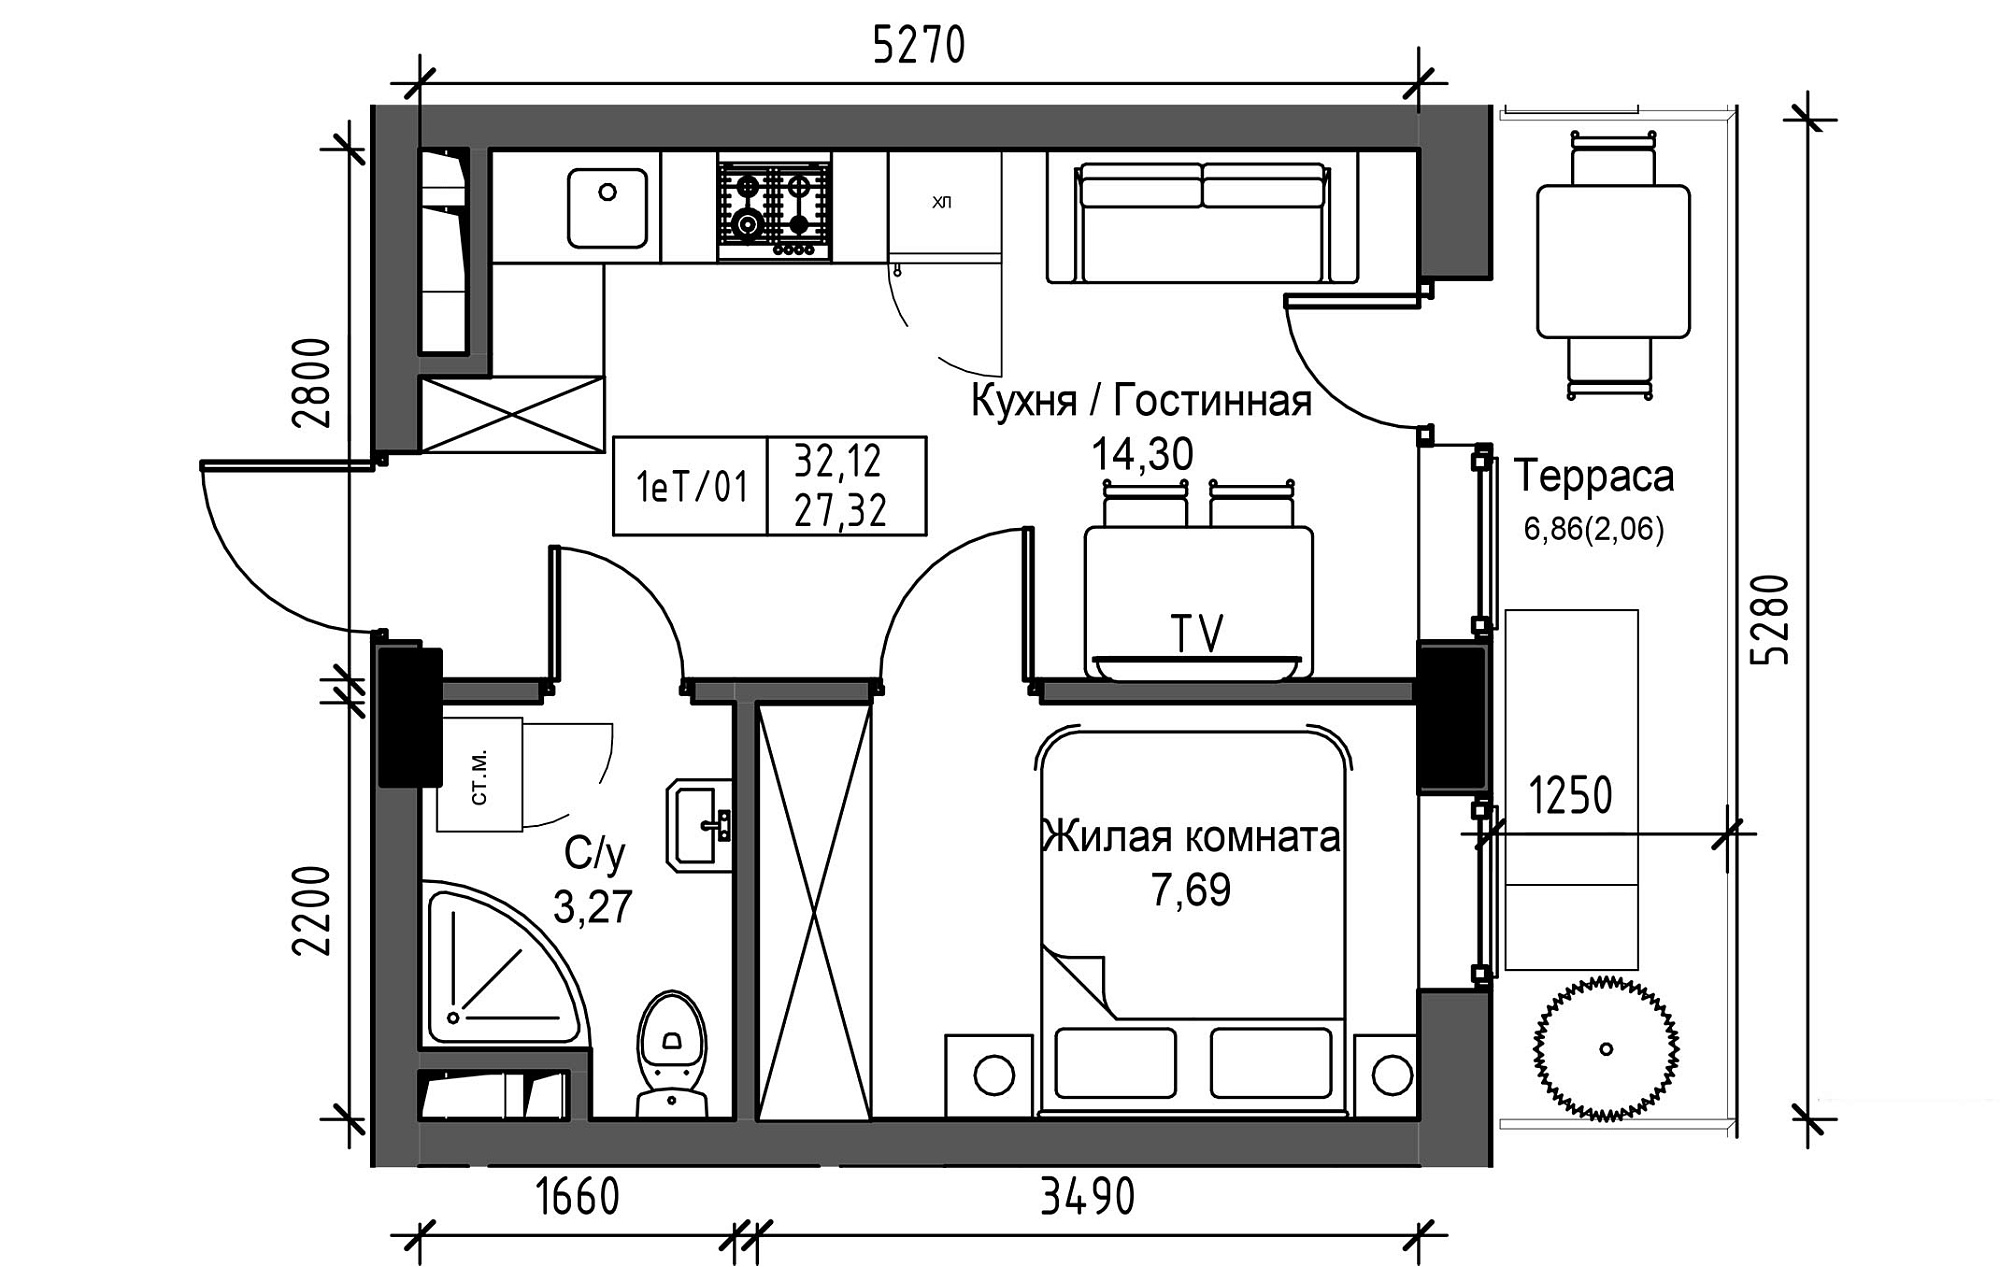 Планування 1-к квартира площею 27.32м2, UM-003-04/0021.